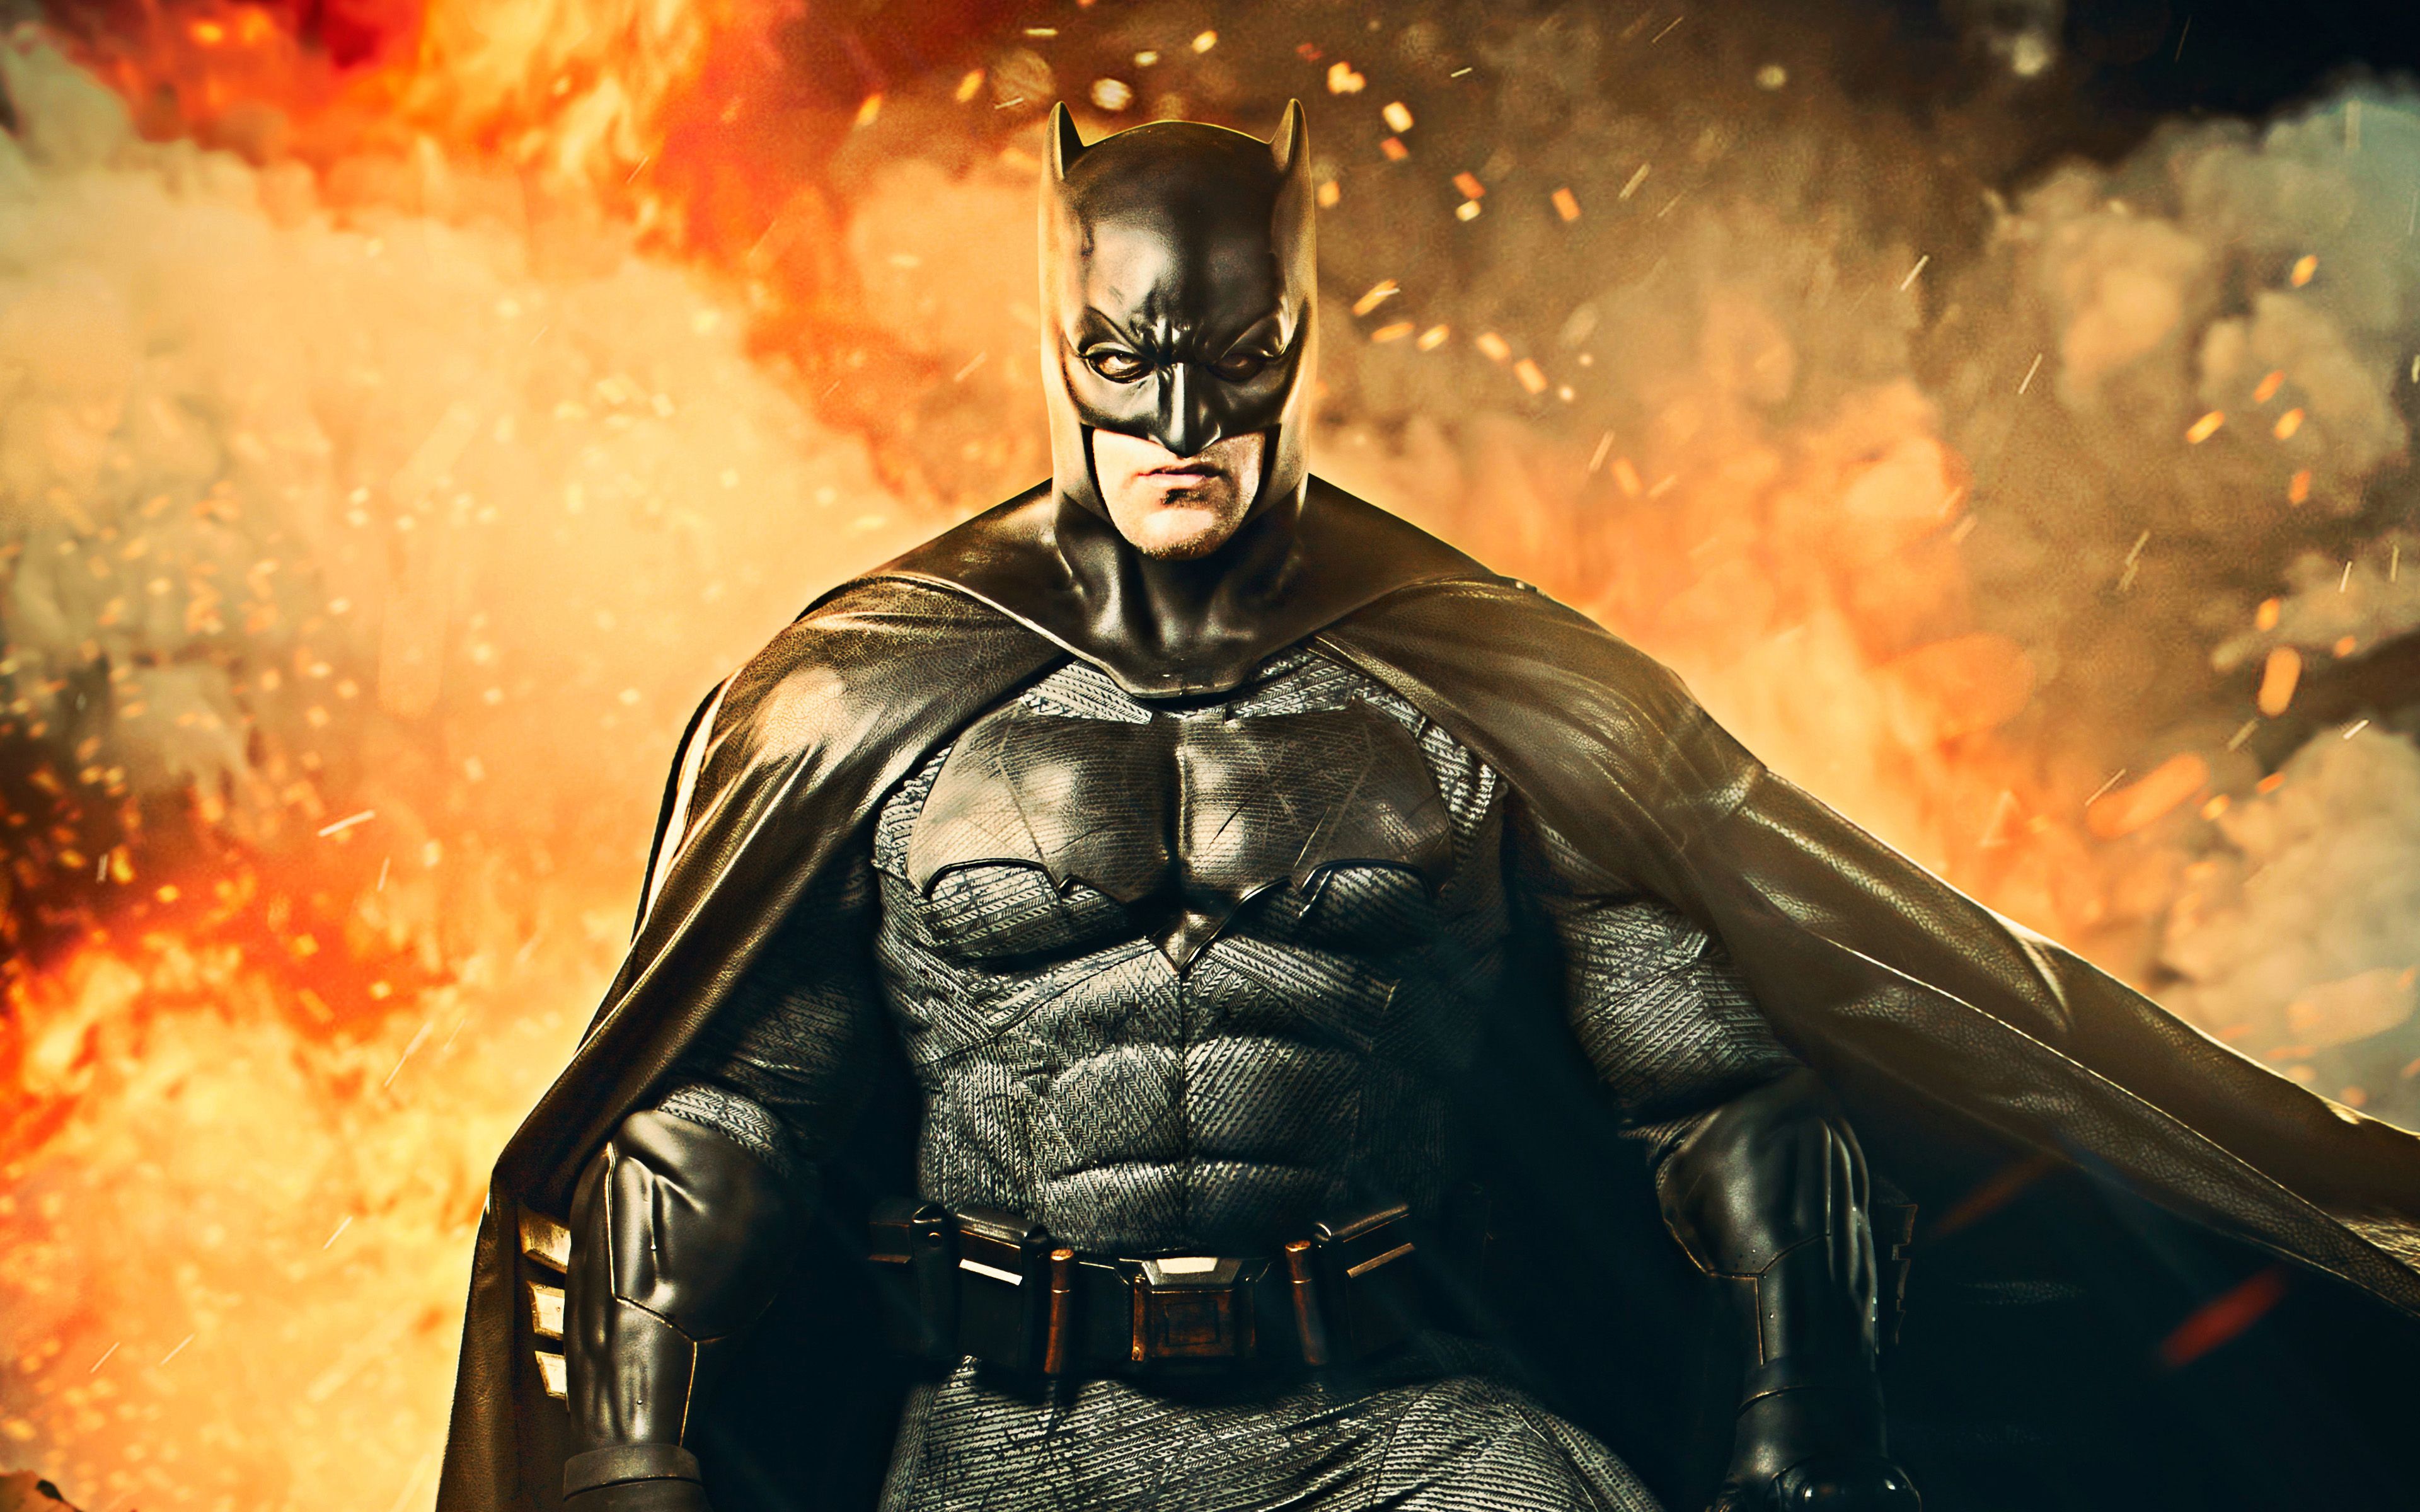 Download Wallpaper 4k, Batman In Fire, Artwork, Batman 3D, Superheroes, Cosplay, Creative, Bat Man For Desktop With Resolution 3840x2400. High Quality HD Picture Wallpaper